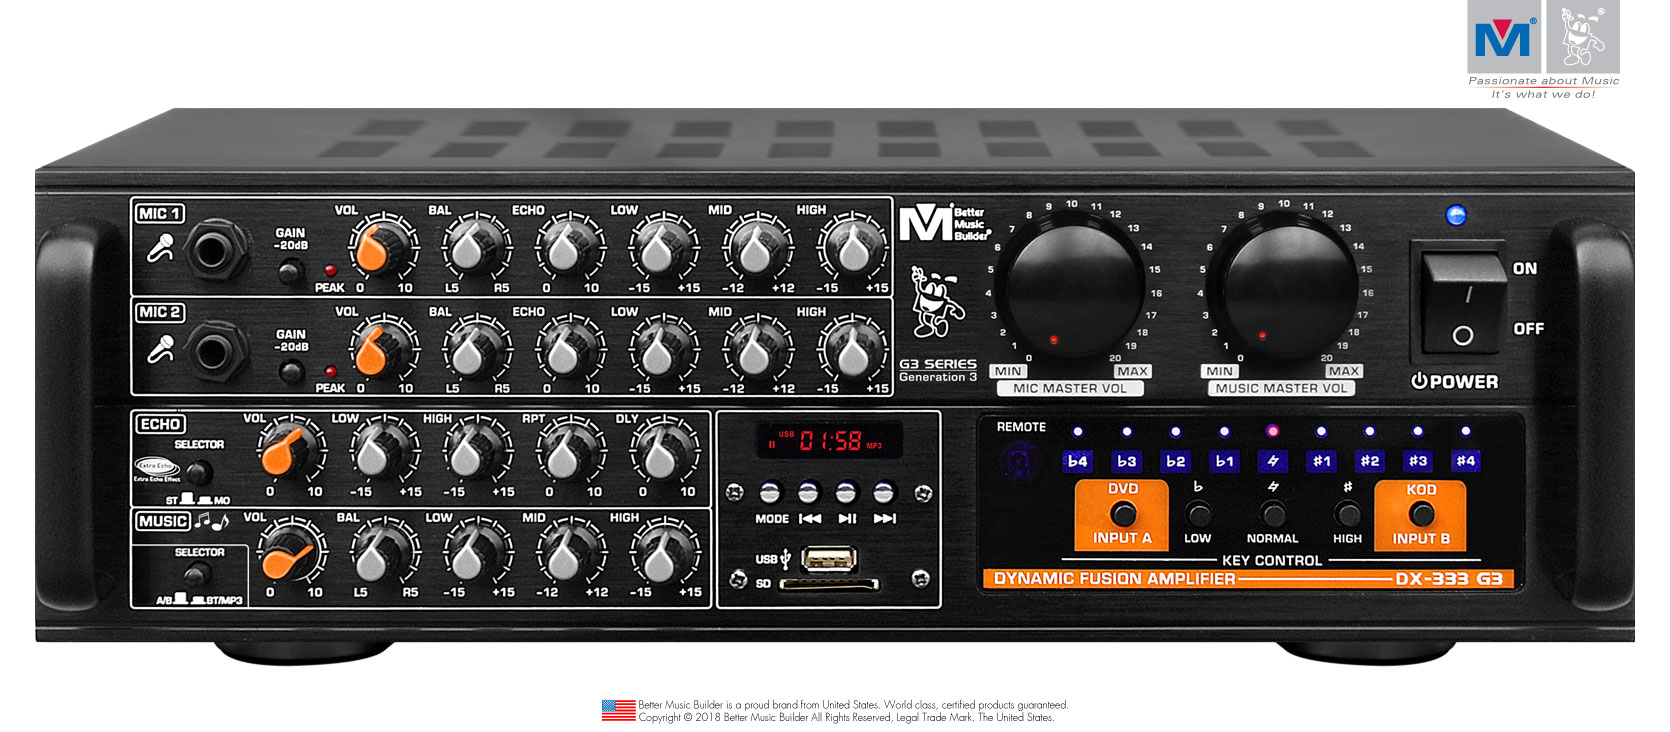 Better Music Builder (M) DX-333 G3 700W Karaoke Mixing Amplifier